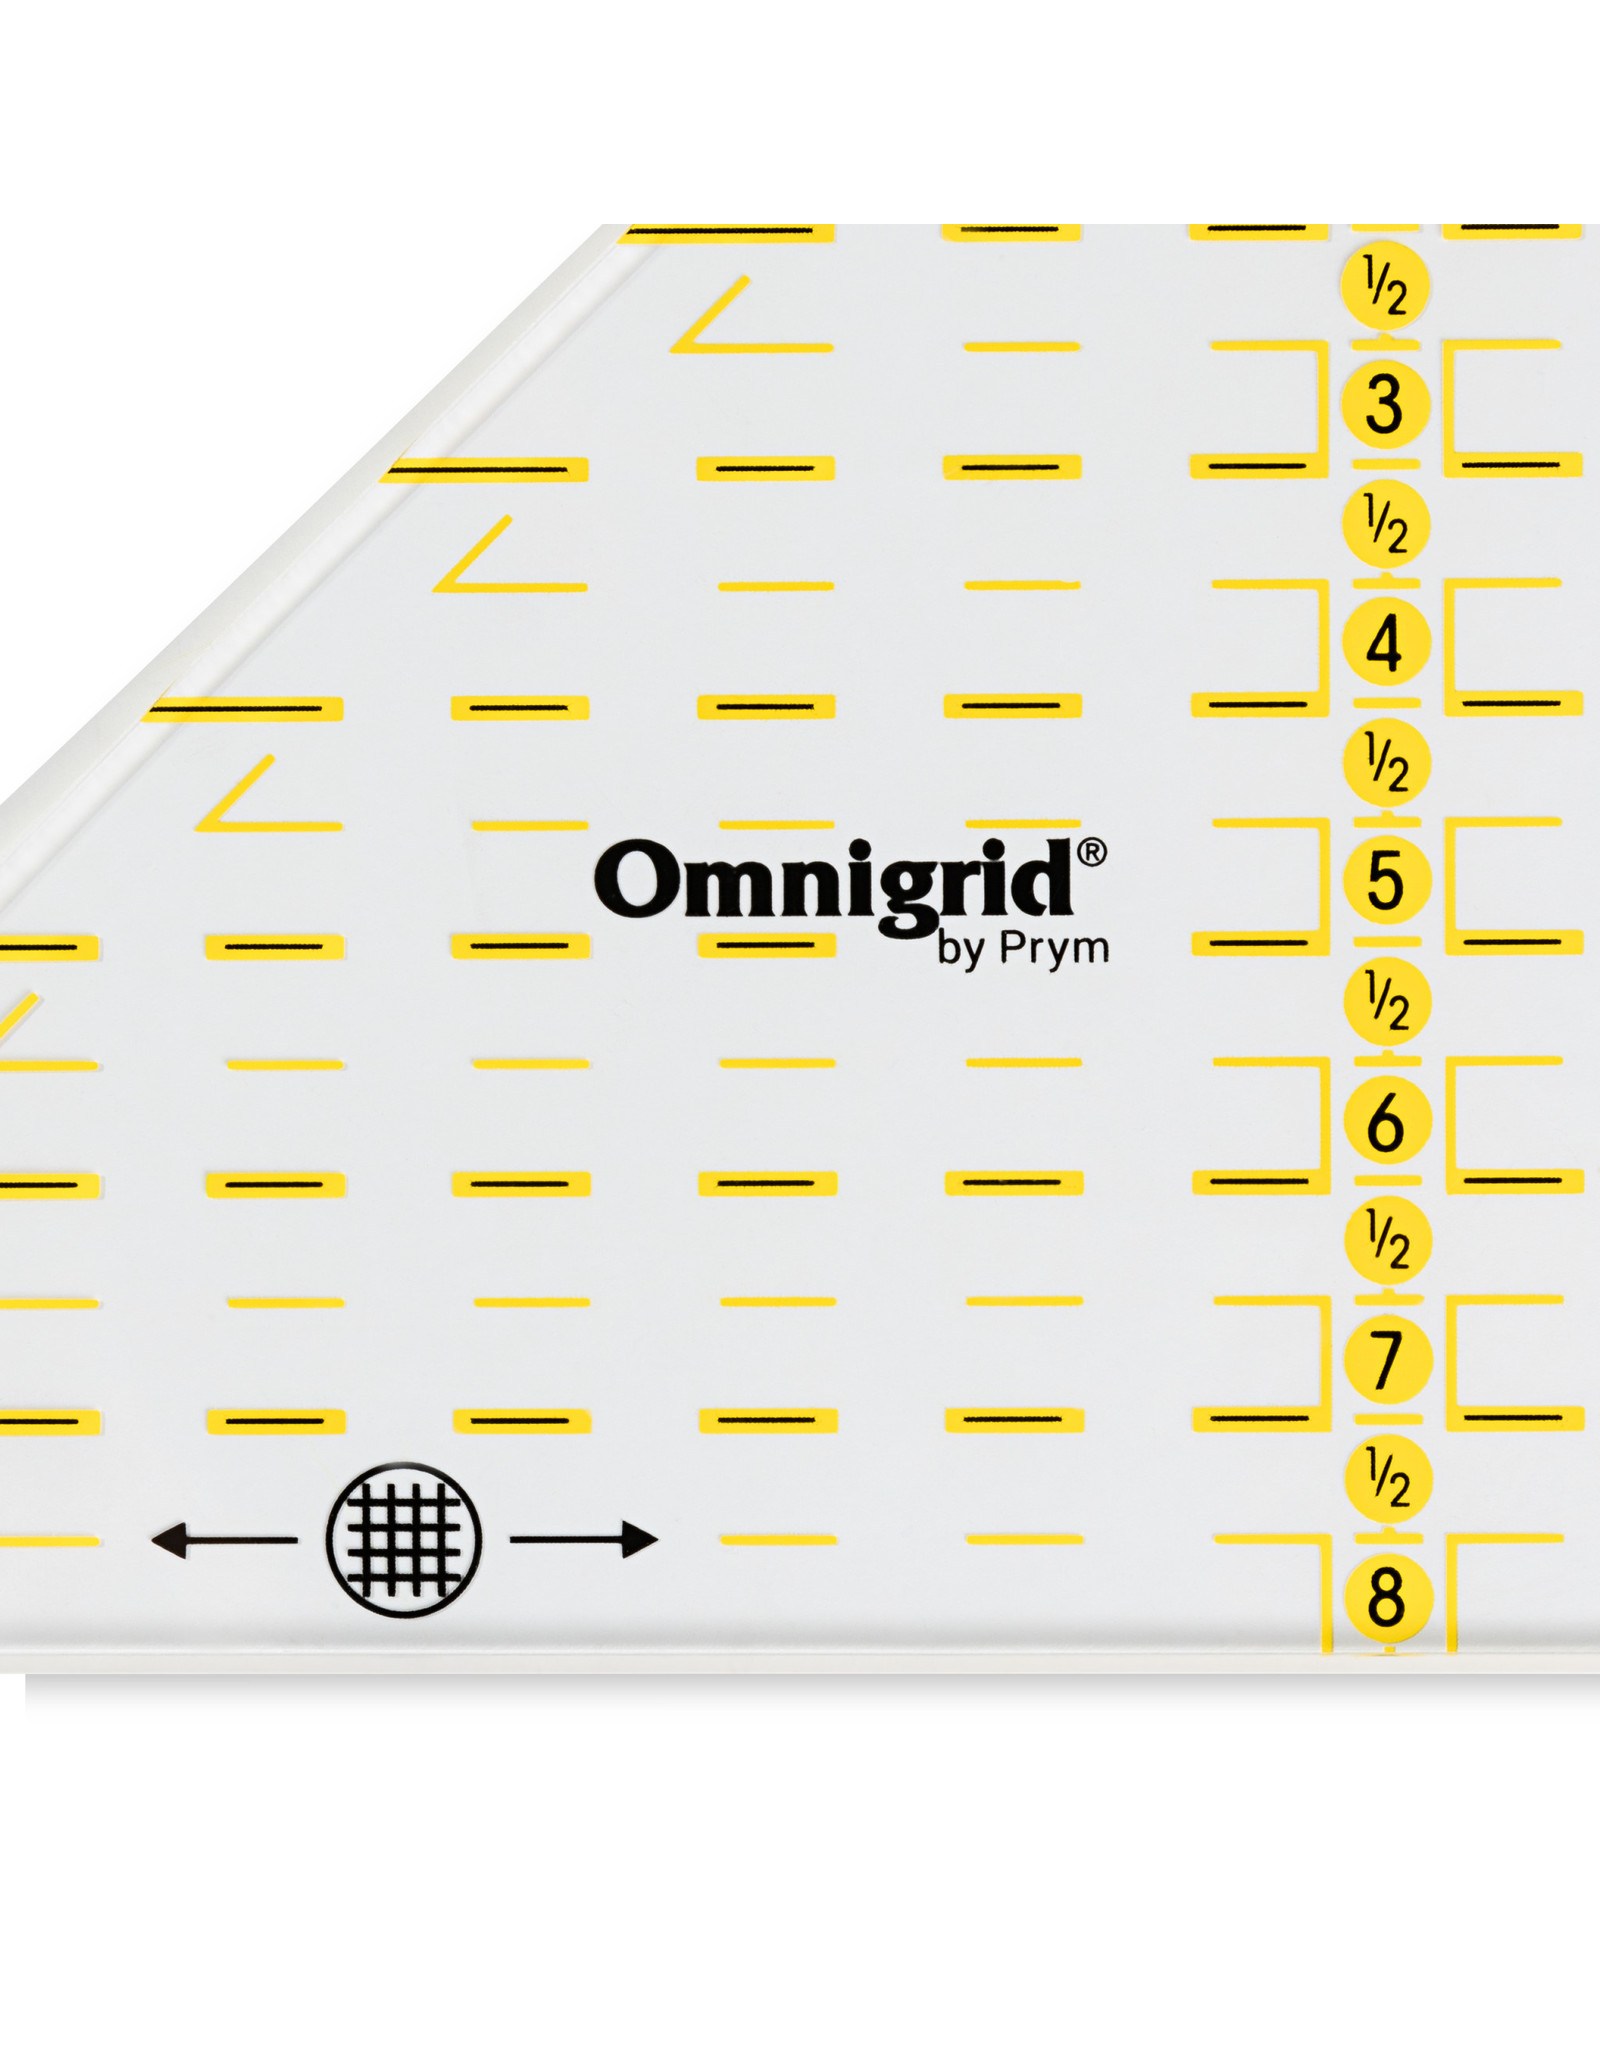 Prym Omnigrid Driehoek voor 1/4 kwadraat tot 8 inch